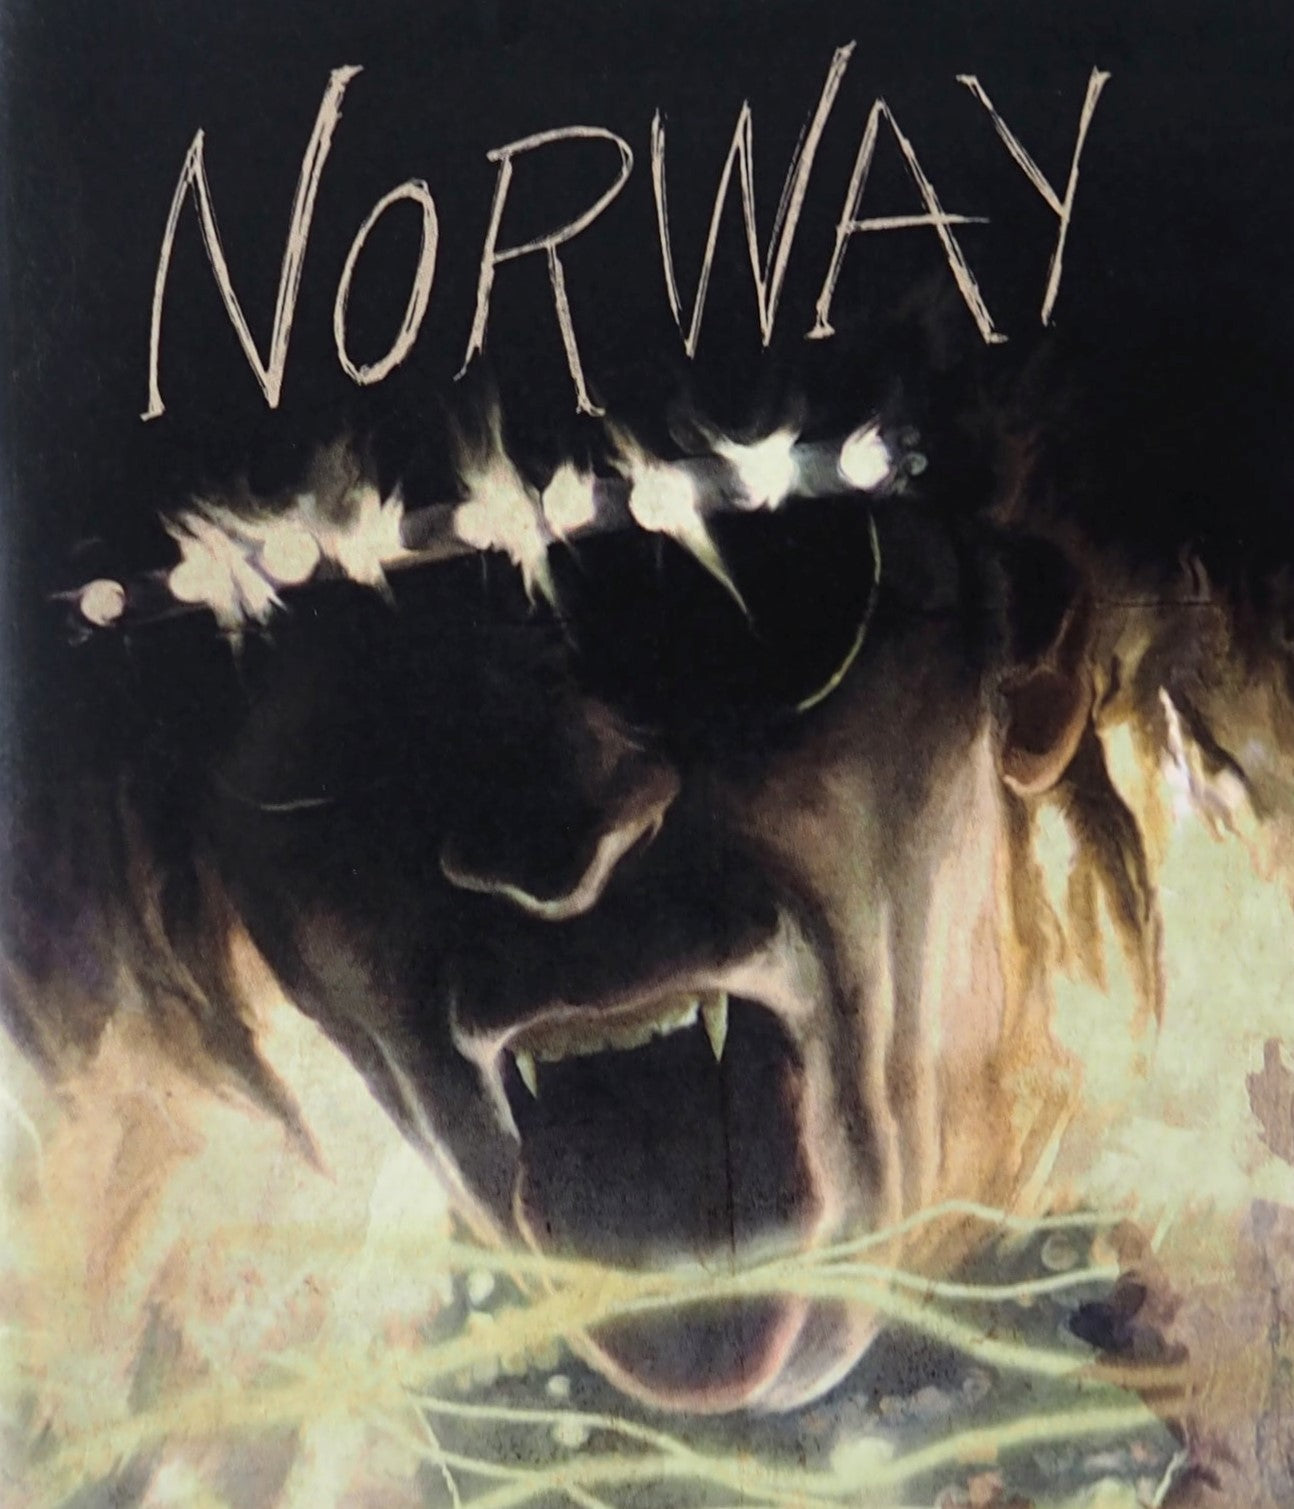 Norway Blu-Ray Blu-Ray